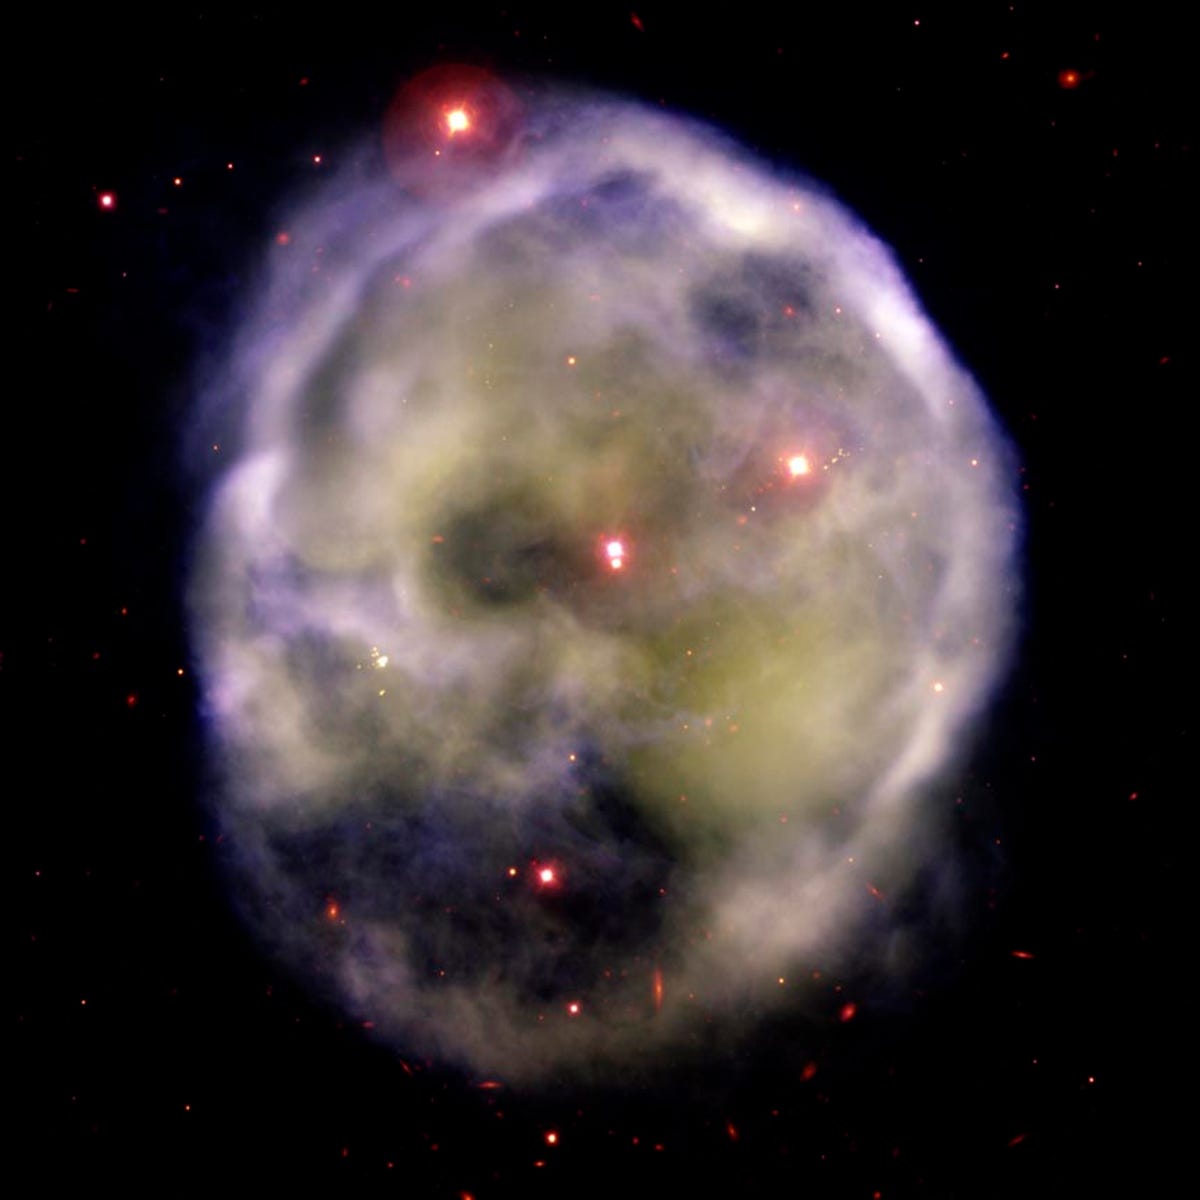 Blobby oval-ish nebula has dark spots that resemble a skull.